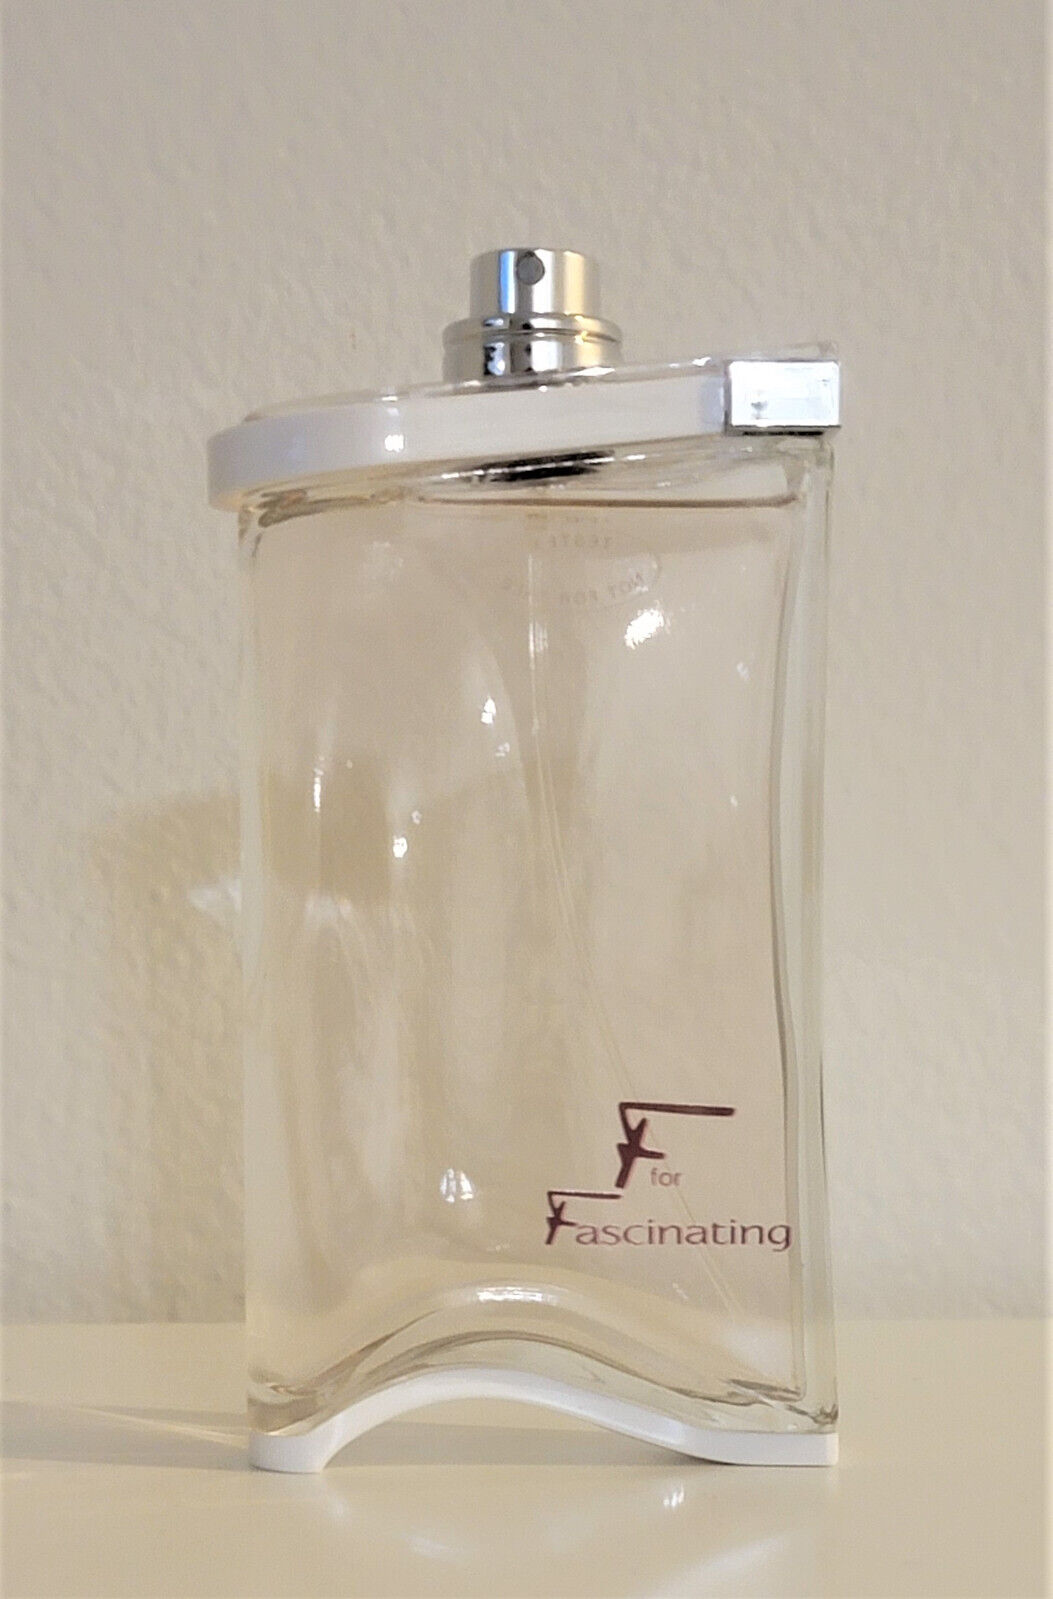 F for Fascinating by Salvatore Ferragamo 3. oz / 90 ml edt spy perfume for women